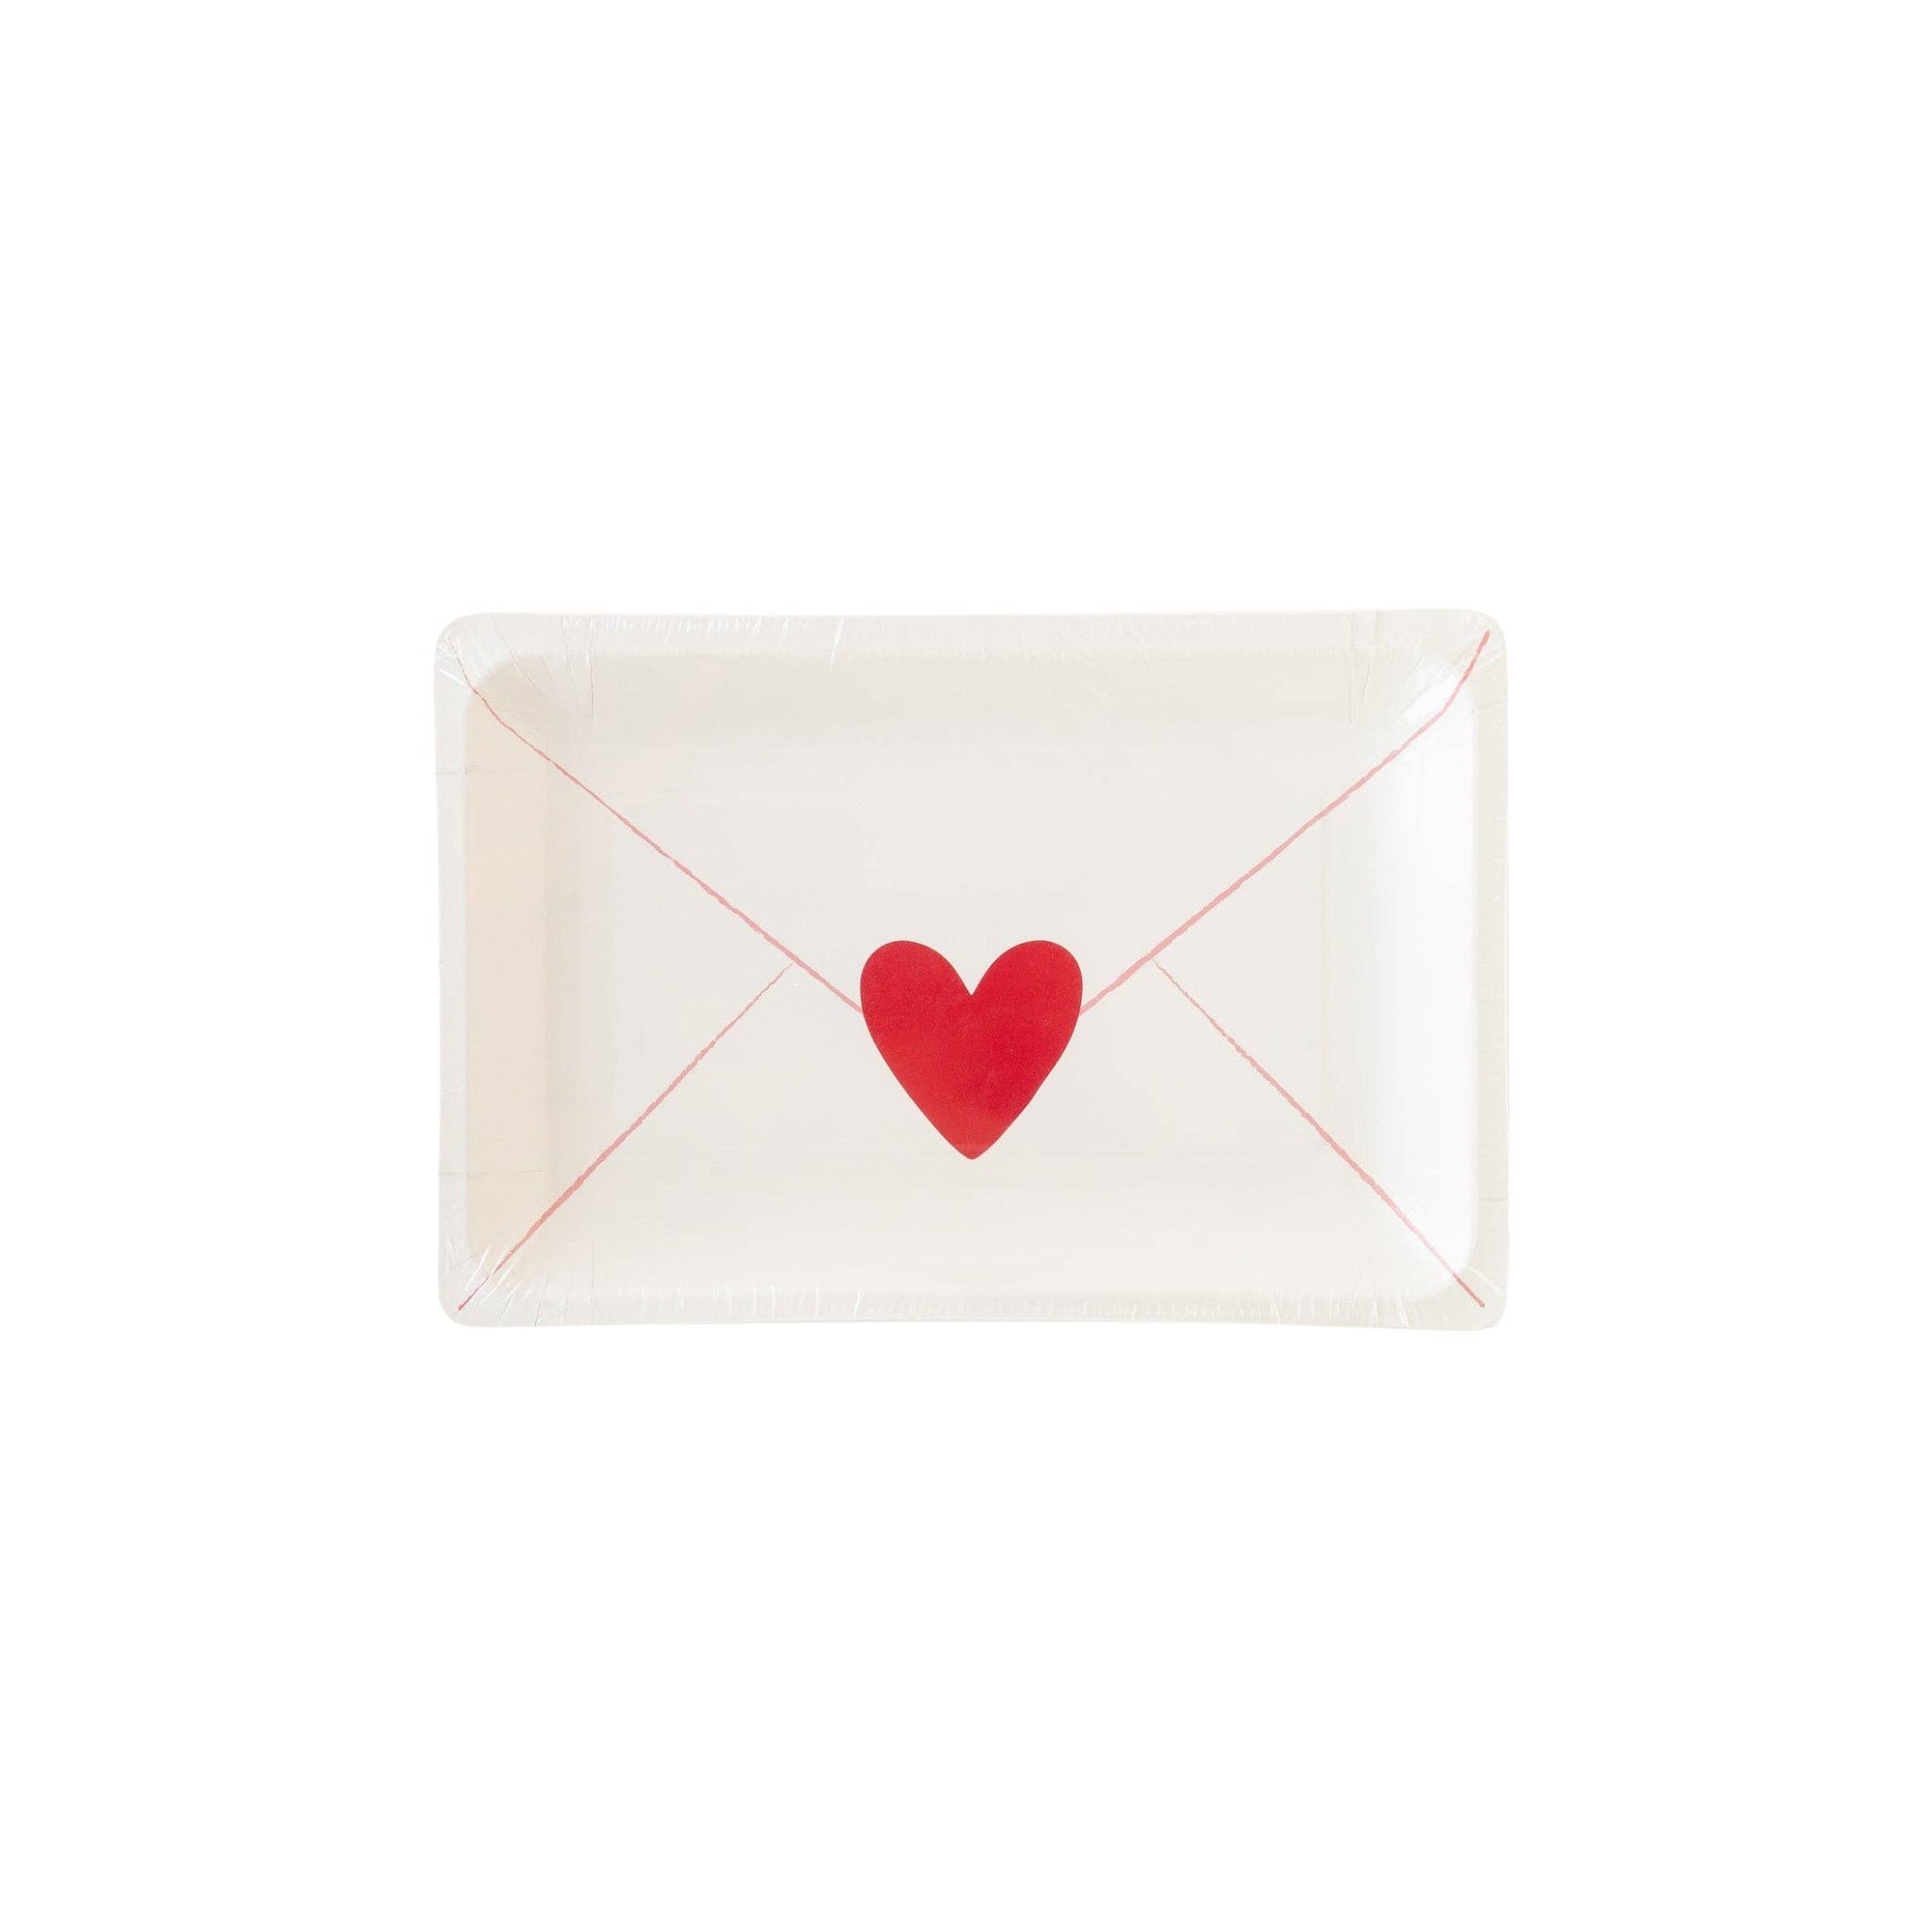 Love Letter Paper Plates